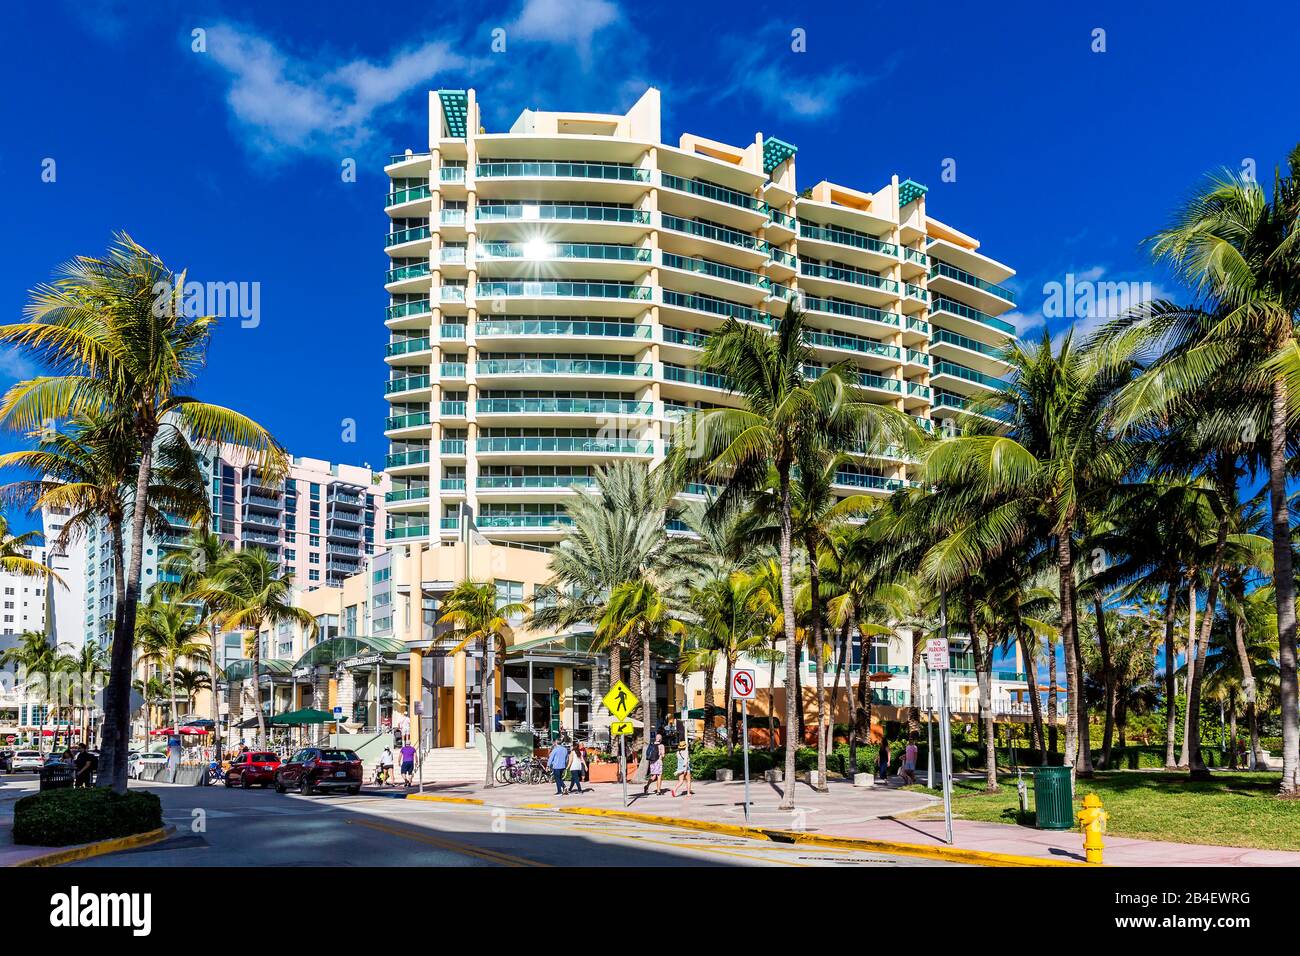 Alberghi, Ferienwohnungen Und Luxusappartements, South Beach, Miami Beach, Miami-Dade County, Florida, Stati Uniti, Nordamerika Foto Stock